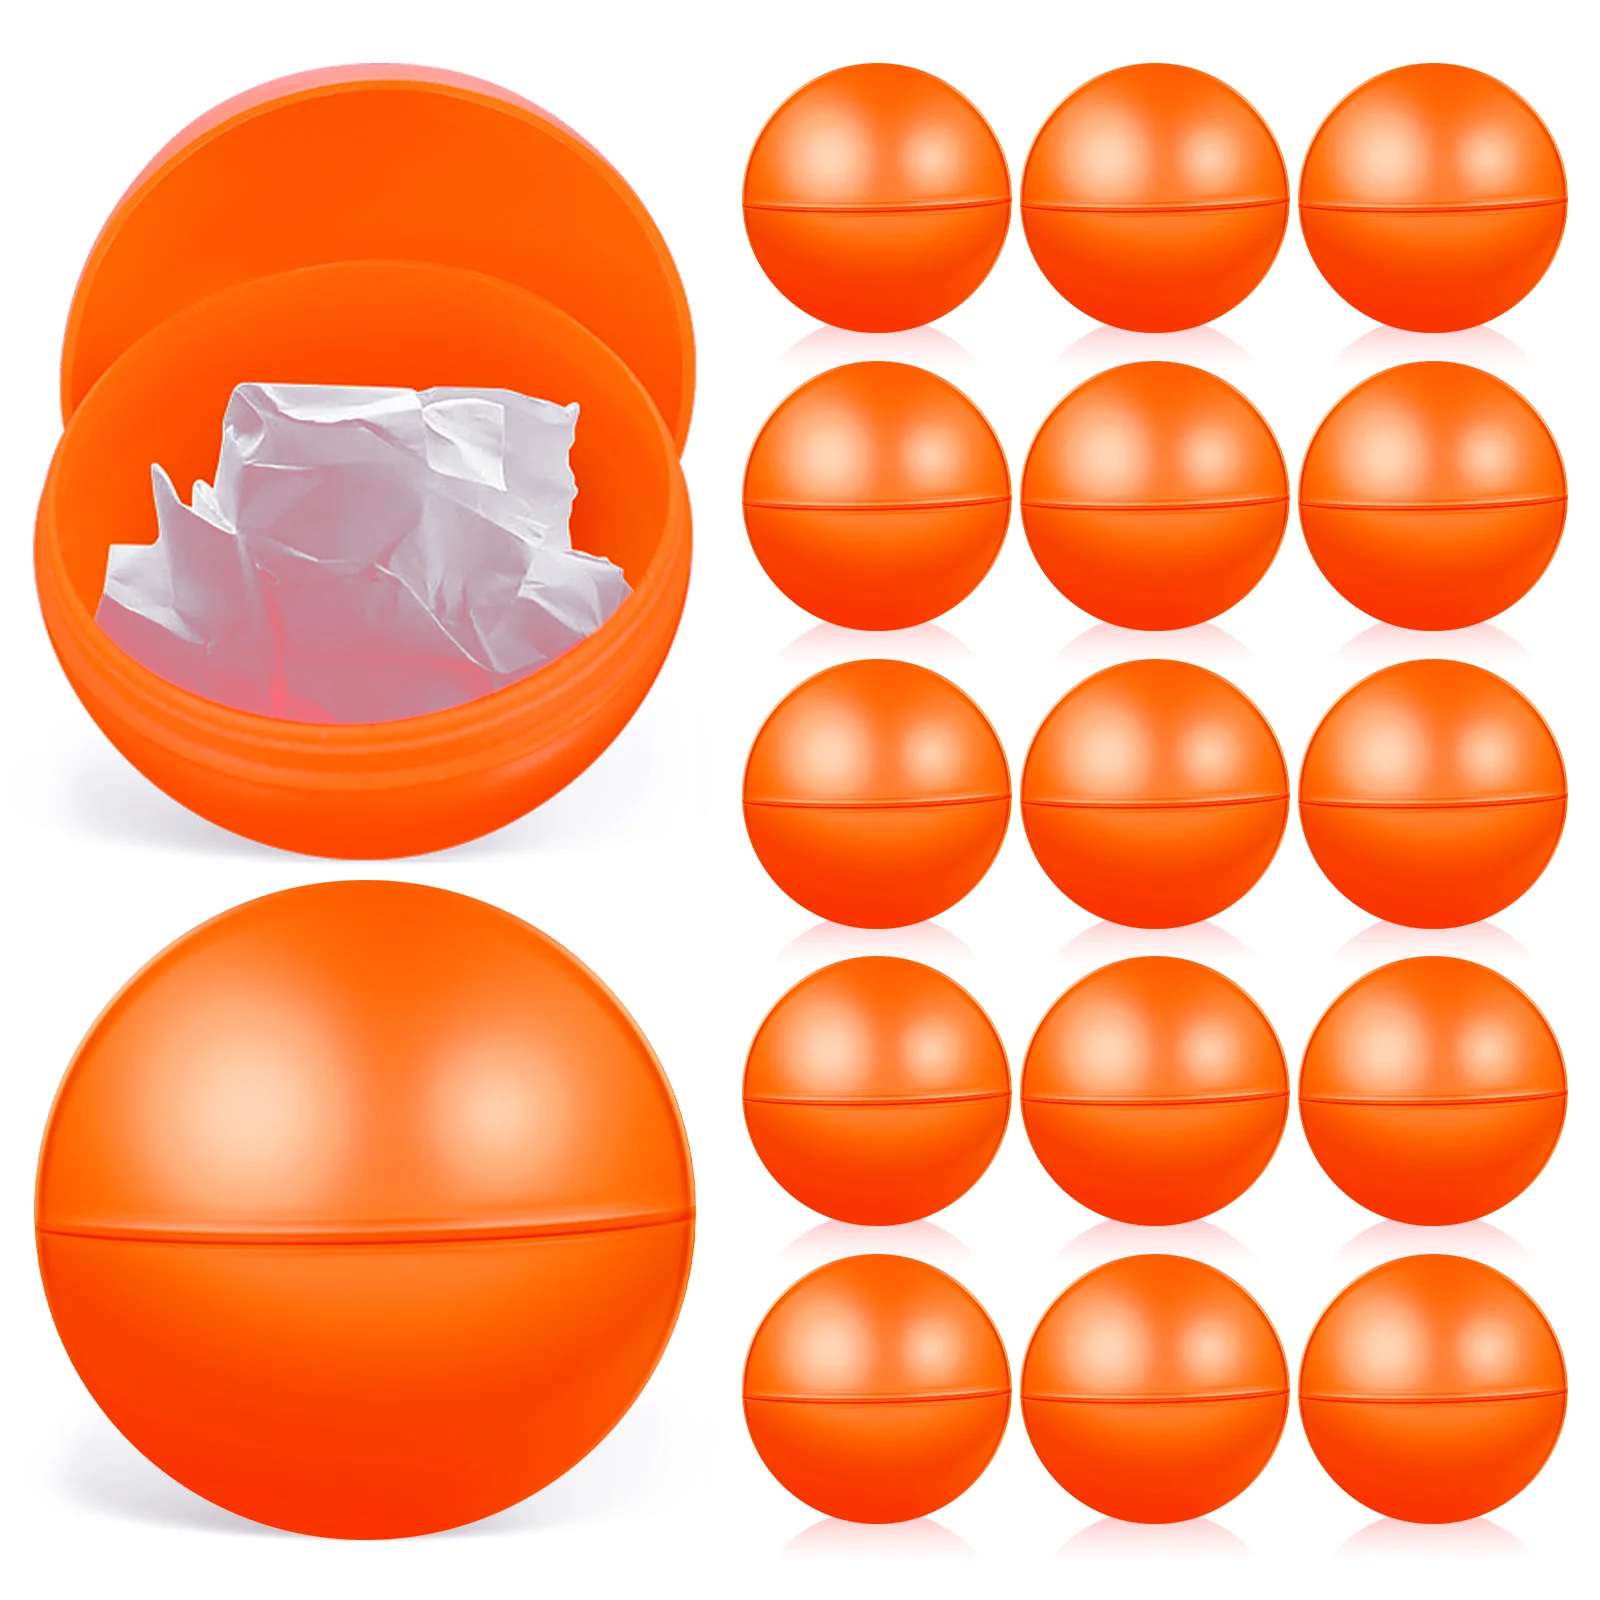 

Lottery Balls Raffle Bingo Plastic Hollow Party Activity Openable Ball Props Supplies Orange